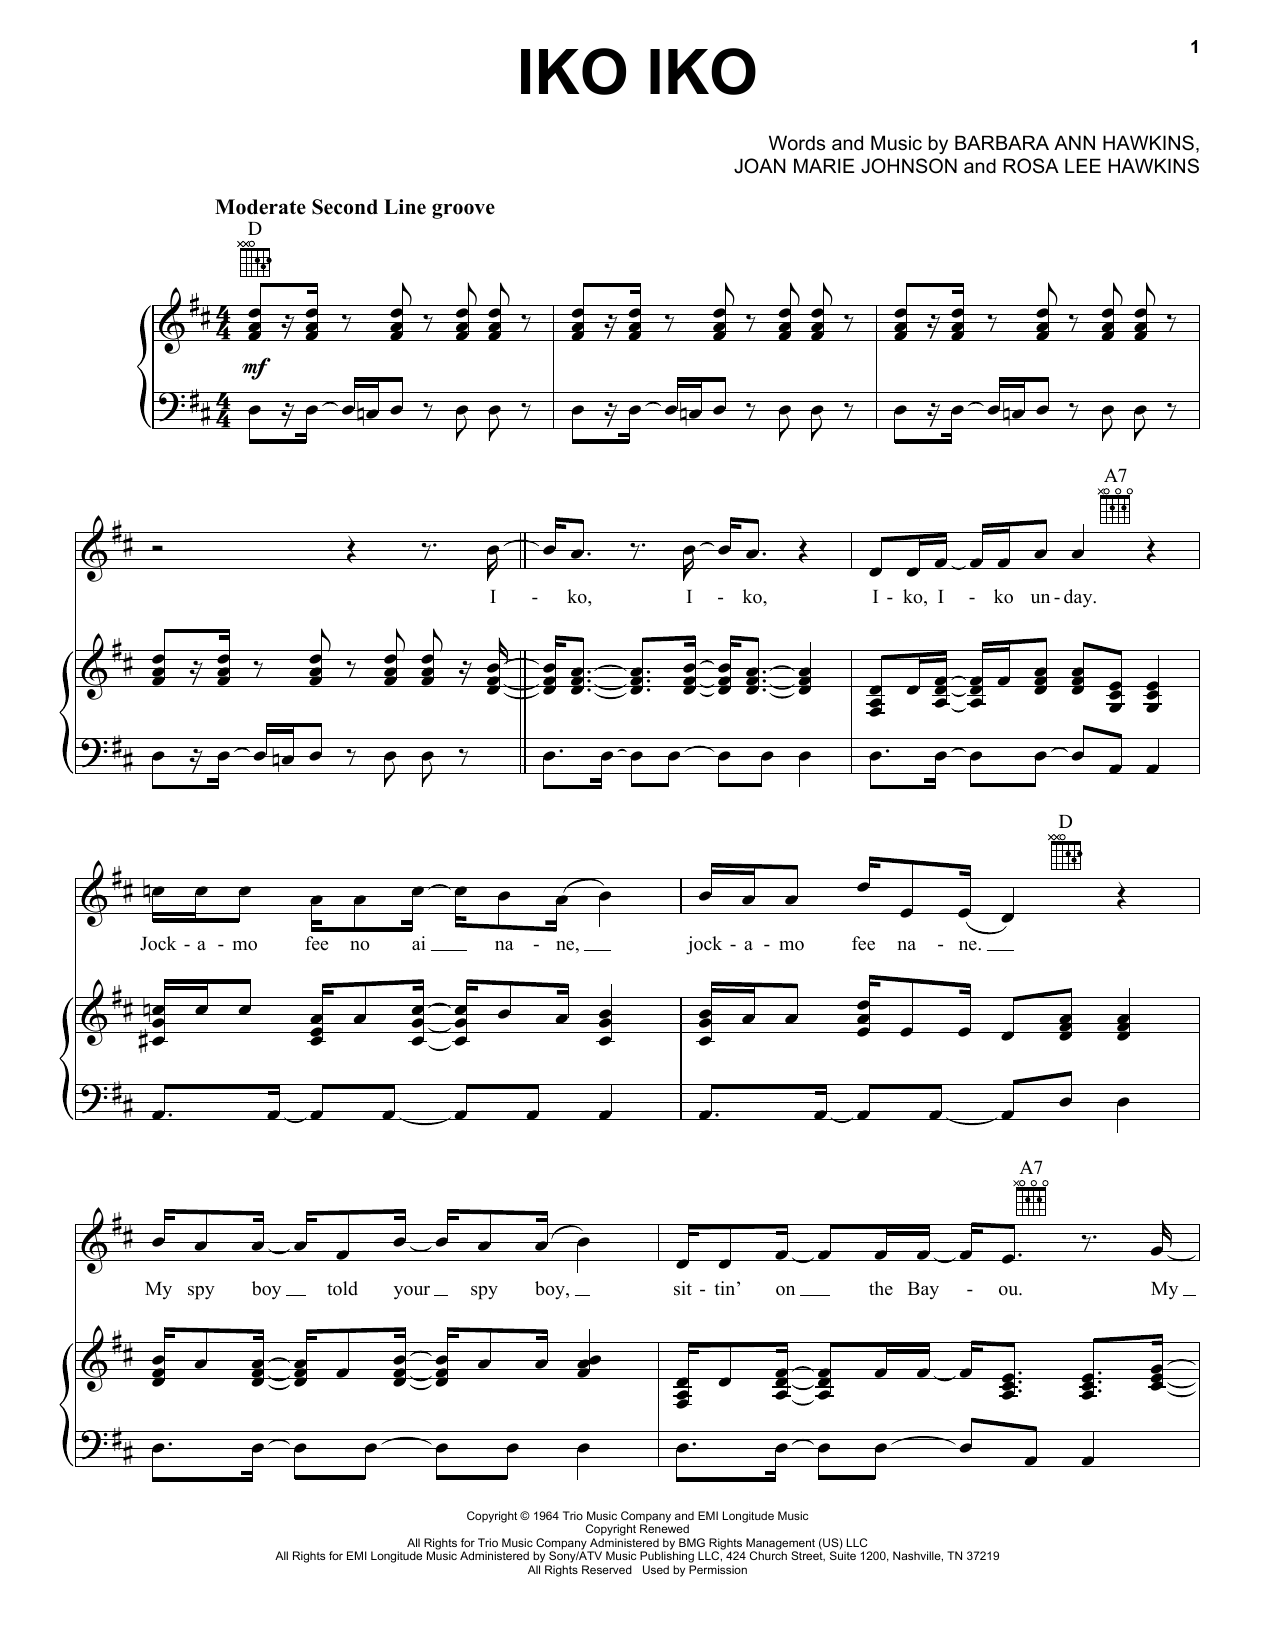 Dr. John Iko Iko Sheet Music Notes & Chords for Piano, Vocal & Guitar (Right-Hand Melody) - Download or Print PDF